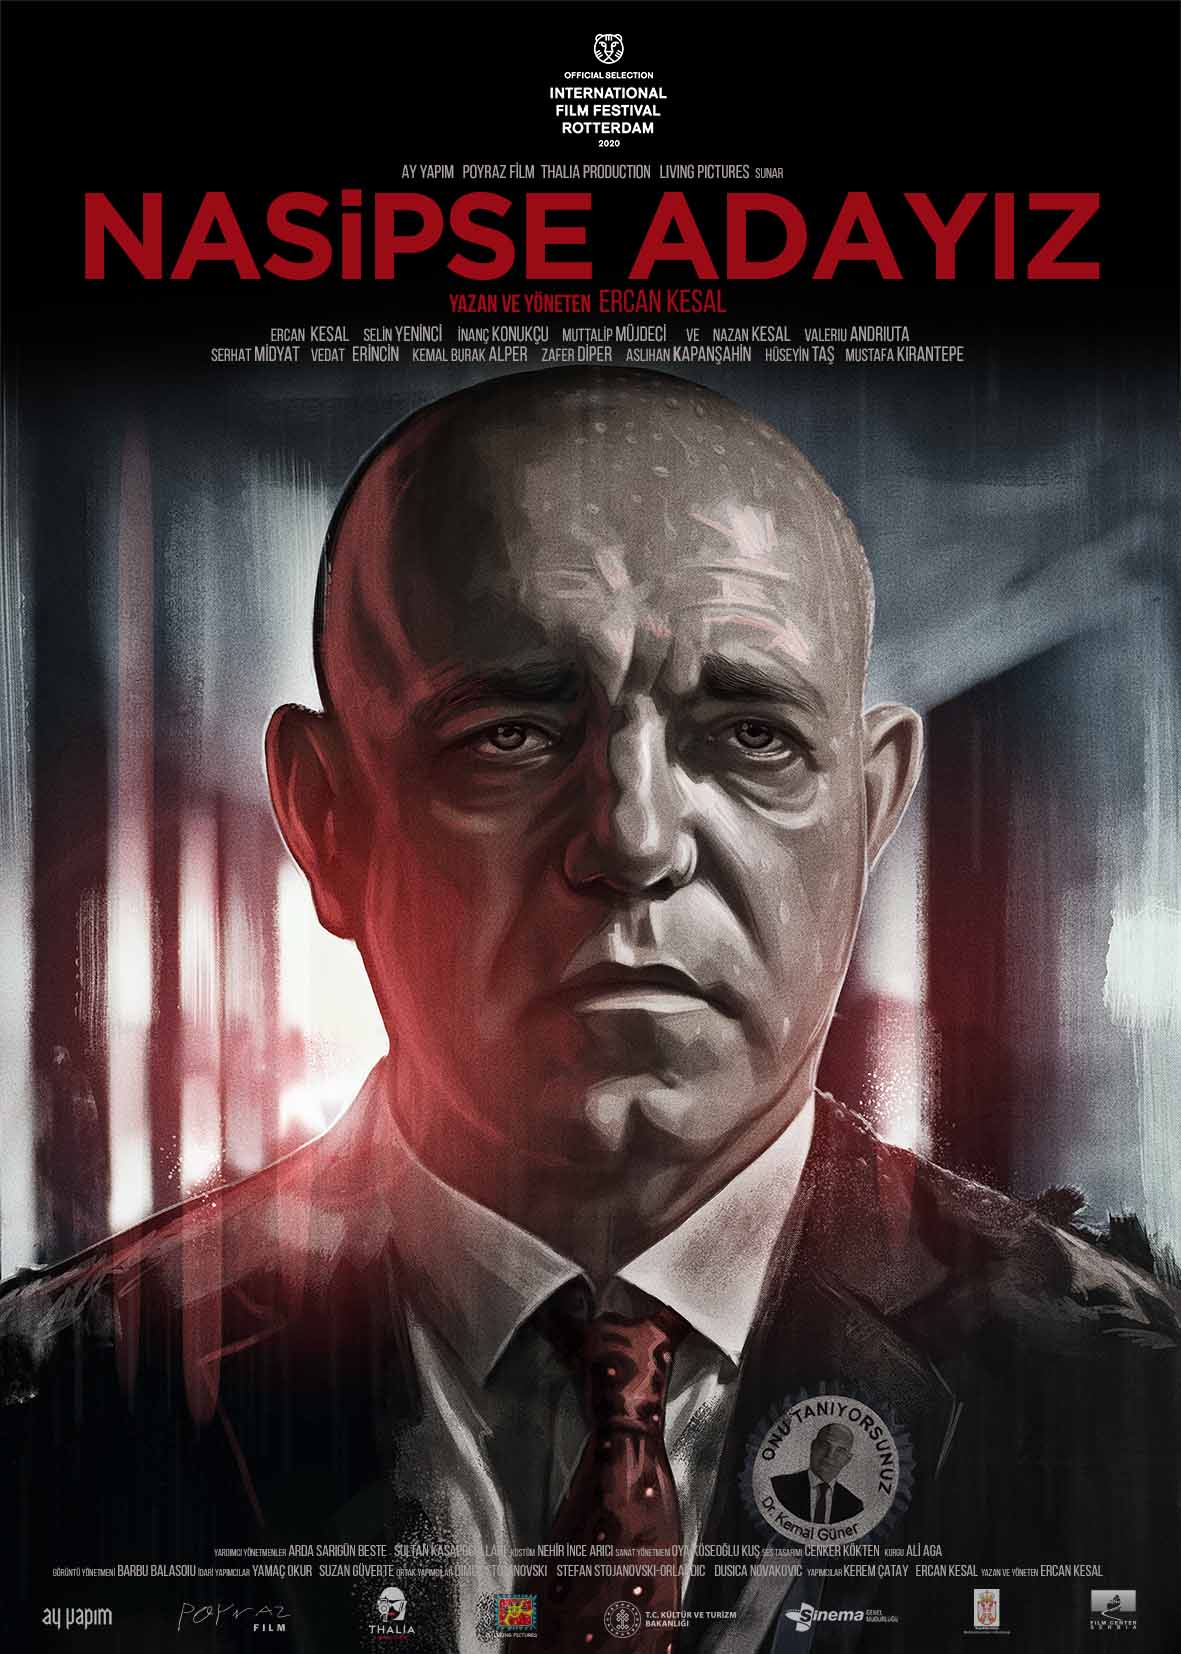 Belgrad Film Festivali'nden Nasipse Adayız'a ödül